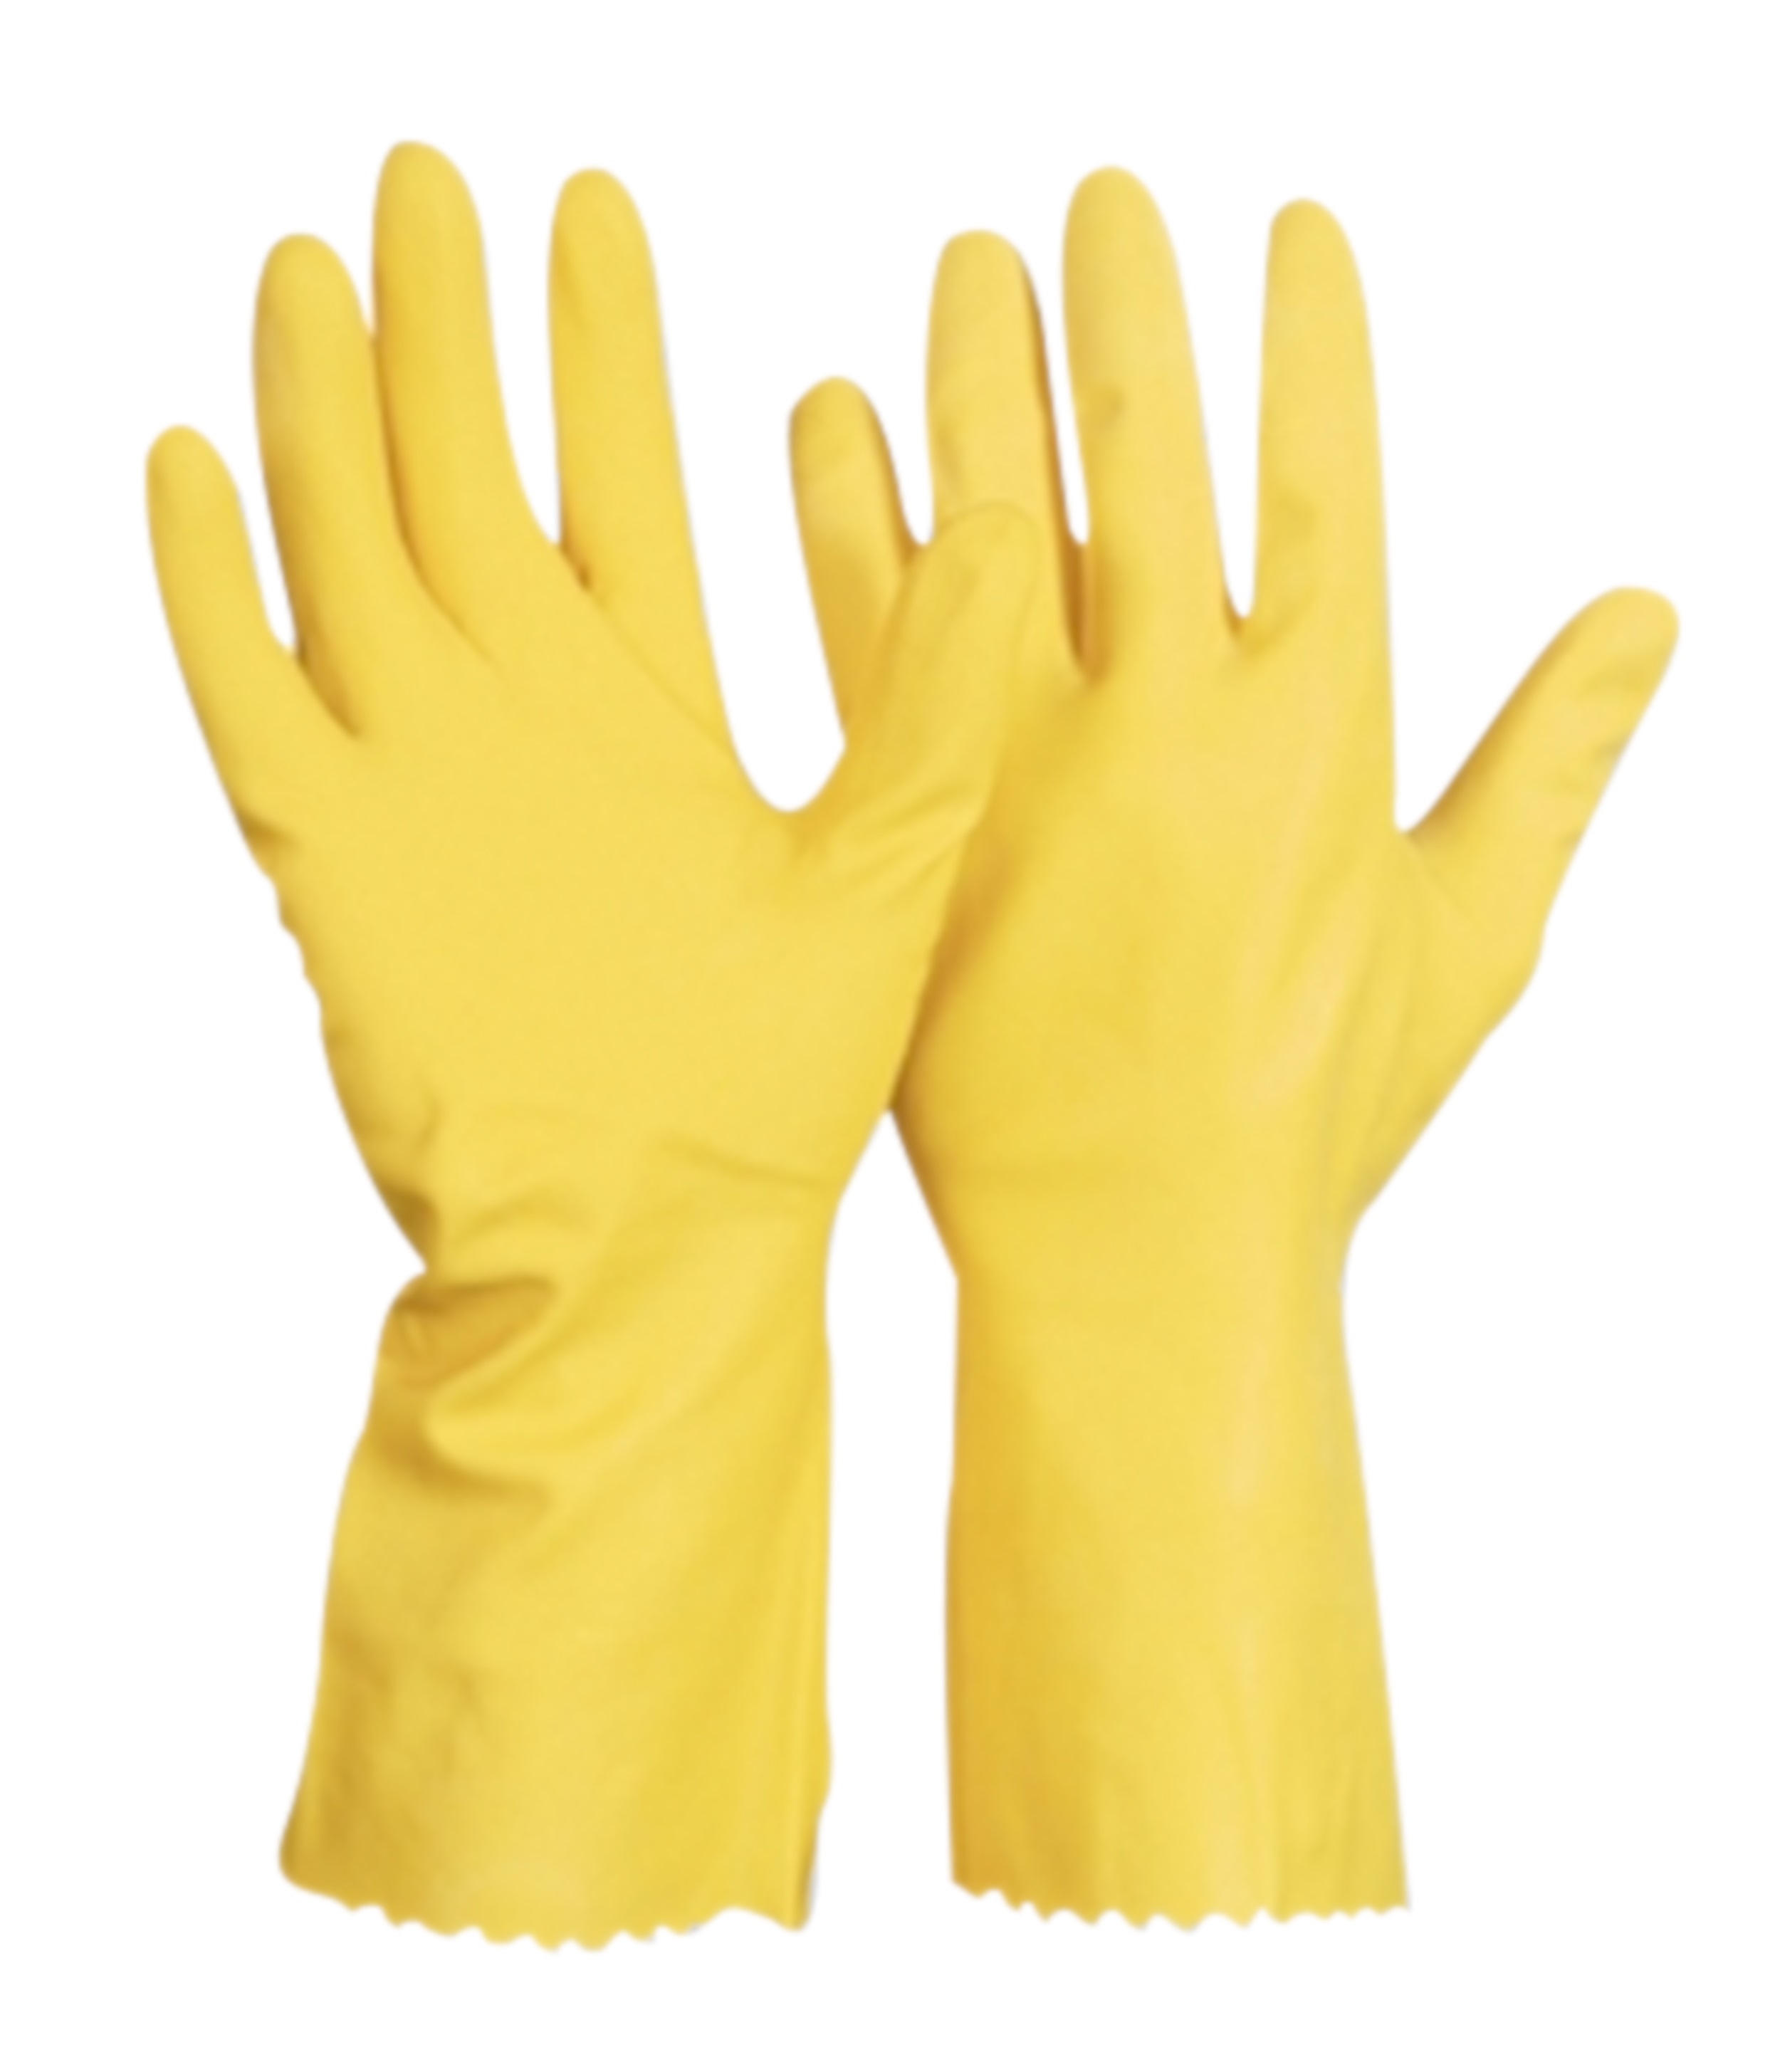 Latex industrial glove